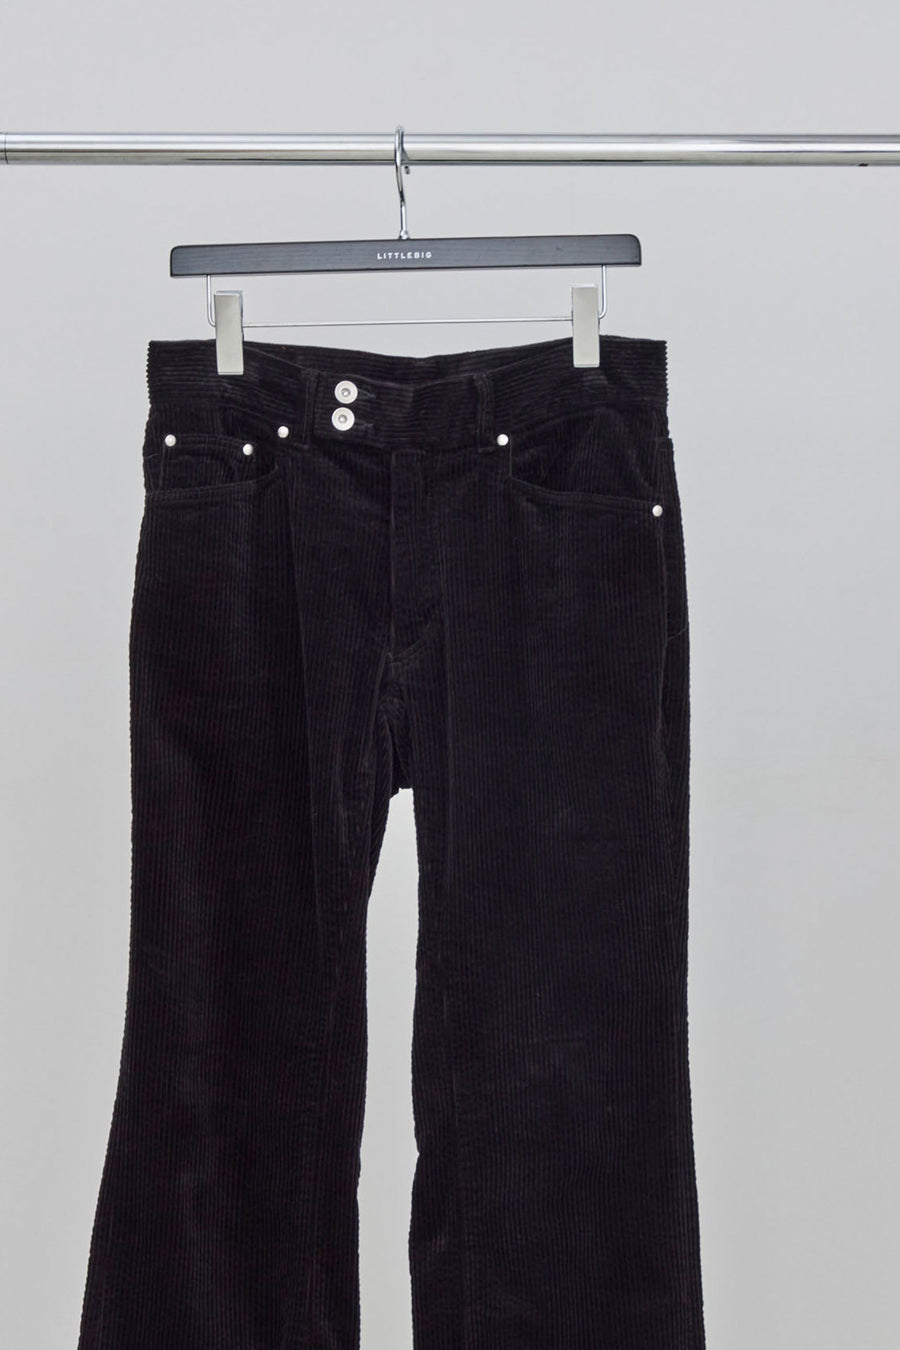 LITTLEBIG  Corduroy Bootcut Pants(Black or Bordeaux)